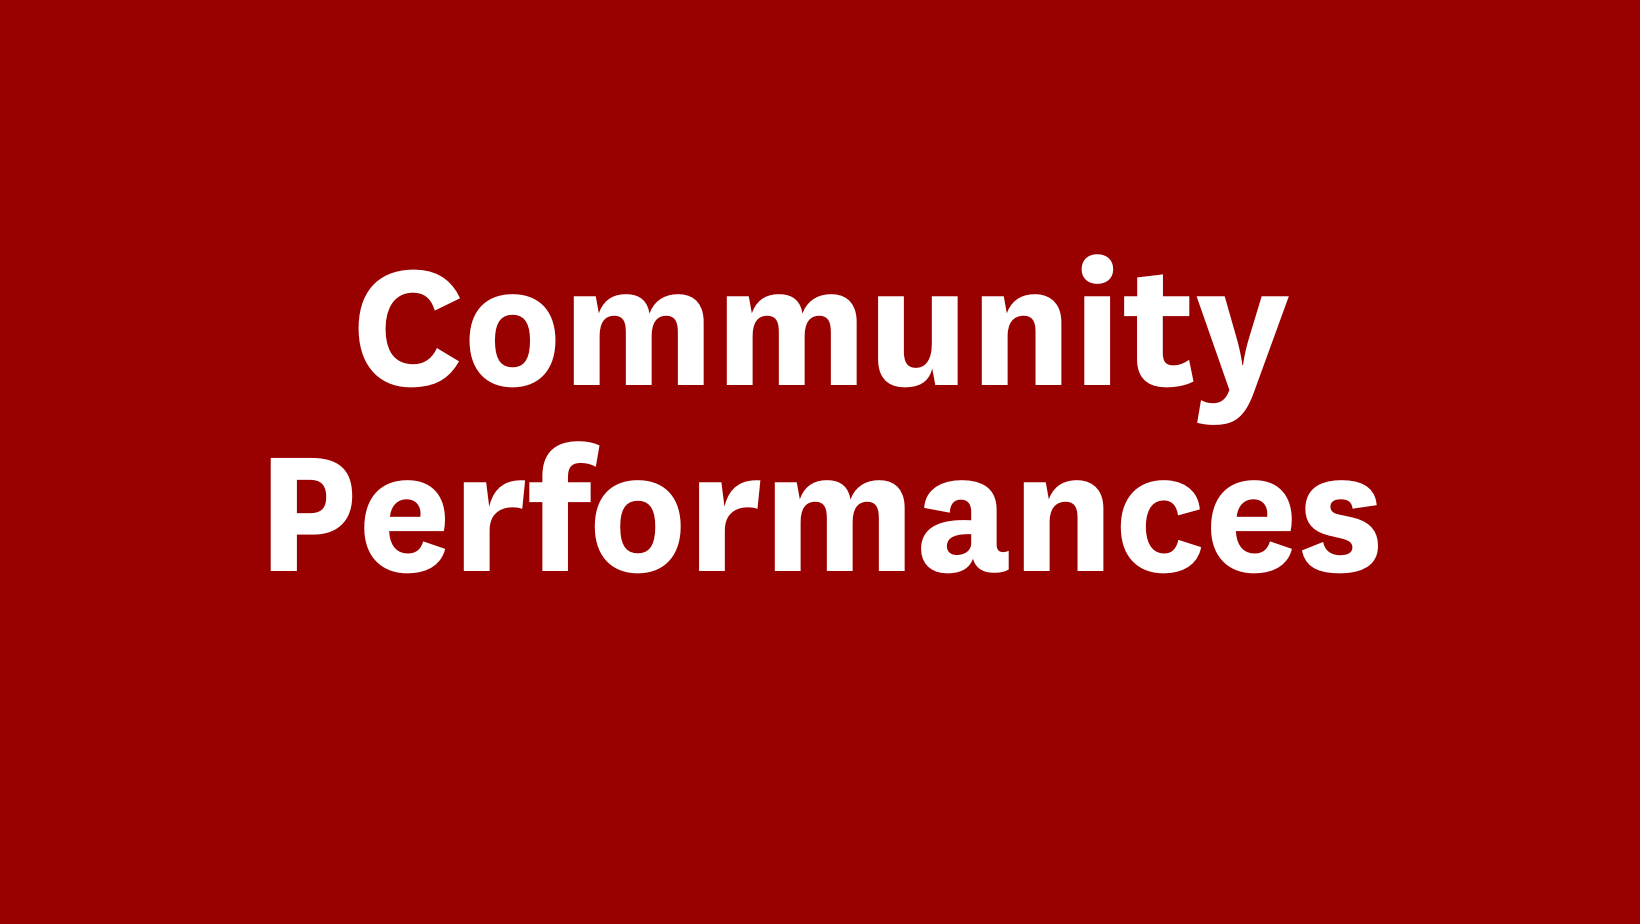 Community Performances